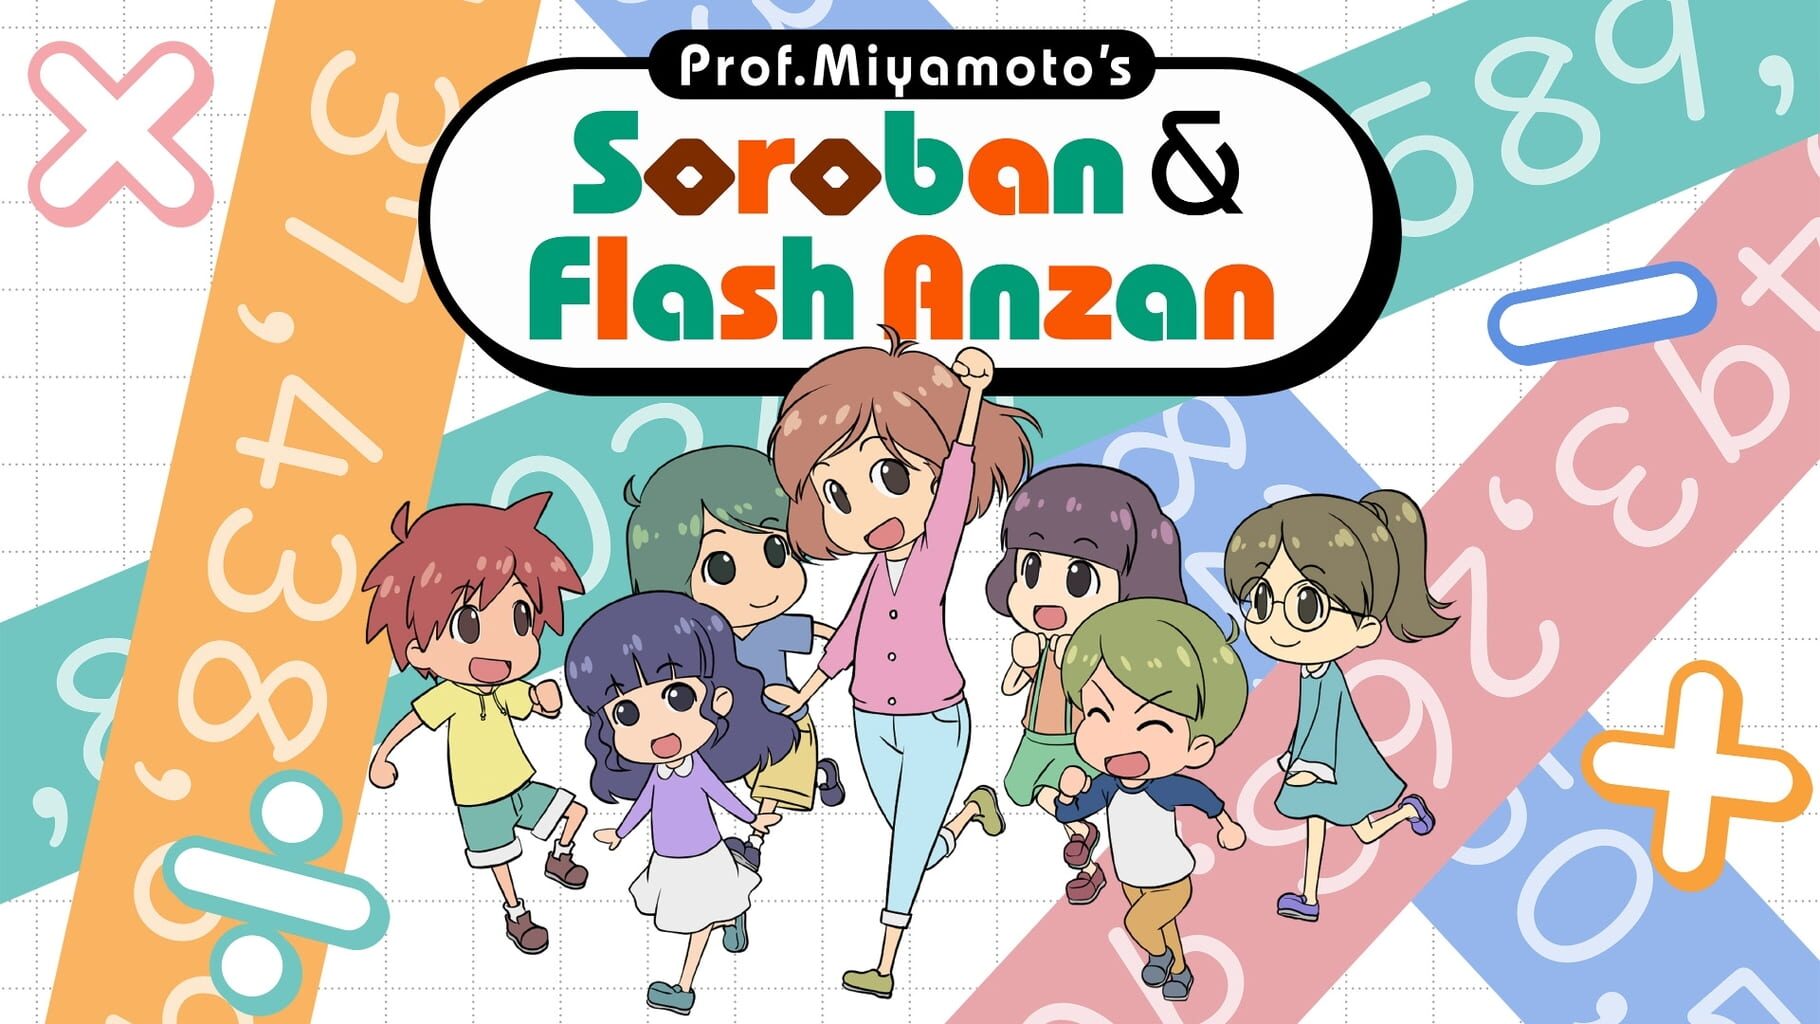 Arte - Prof. Miyamoto's Soroban & Flash Anzan